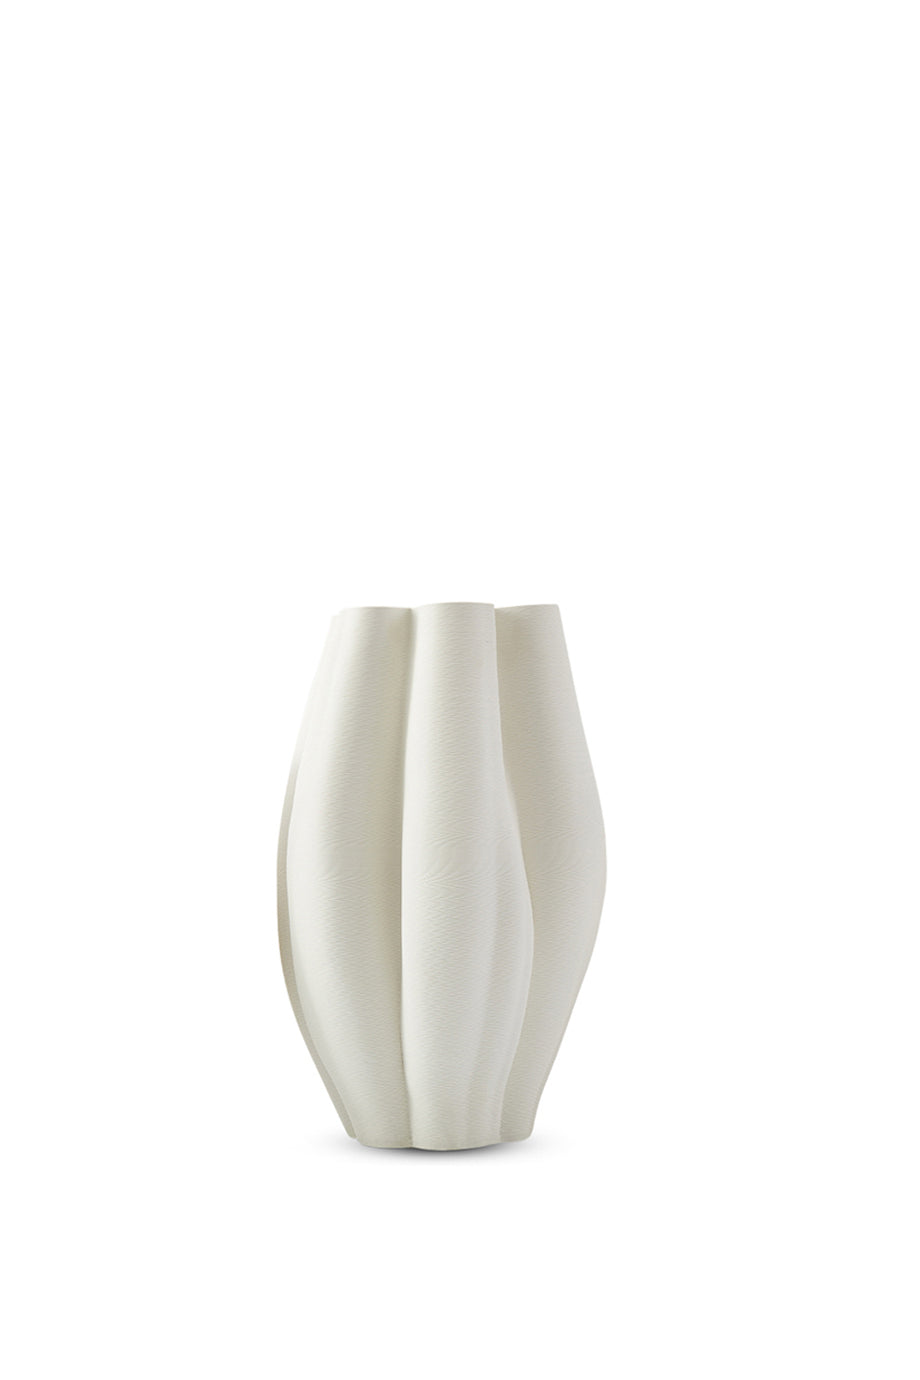 Husk Mer Vase - Ivory